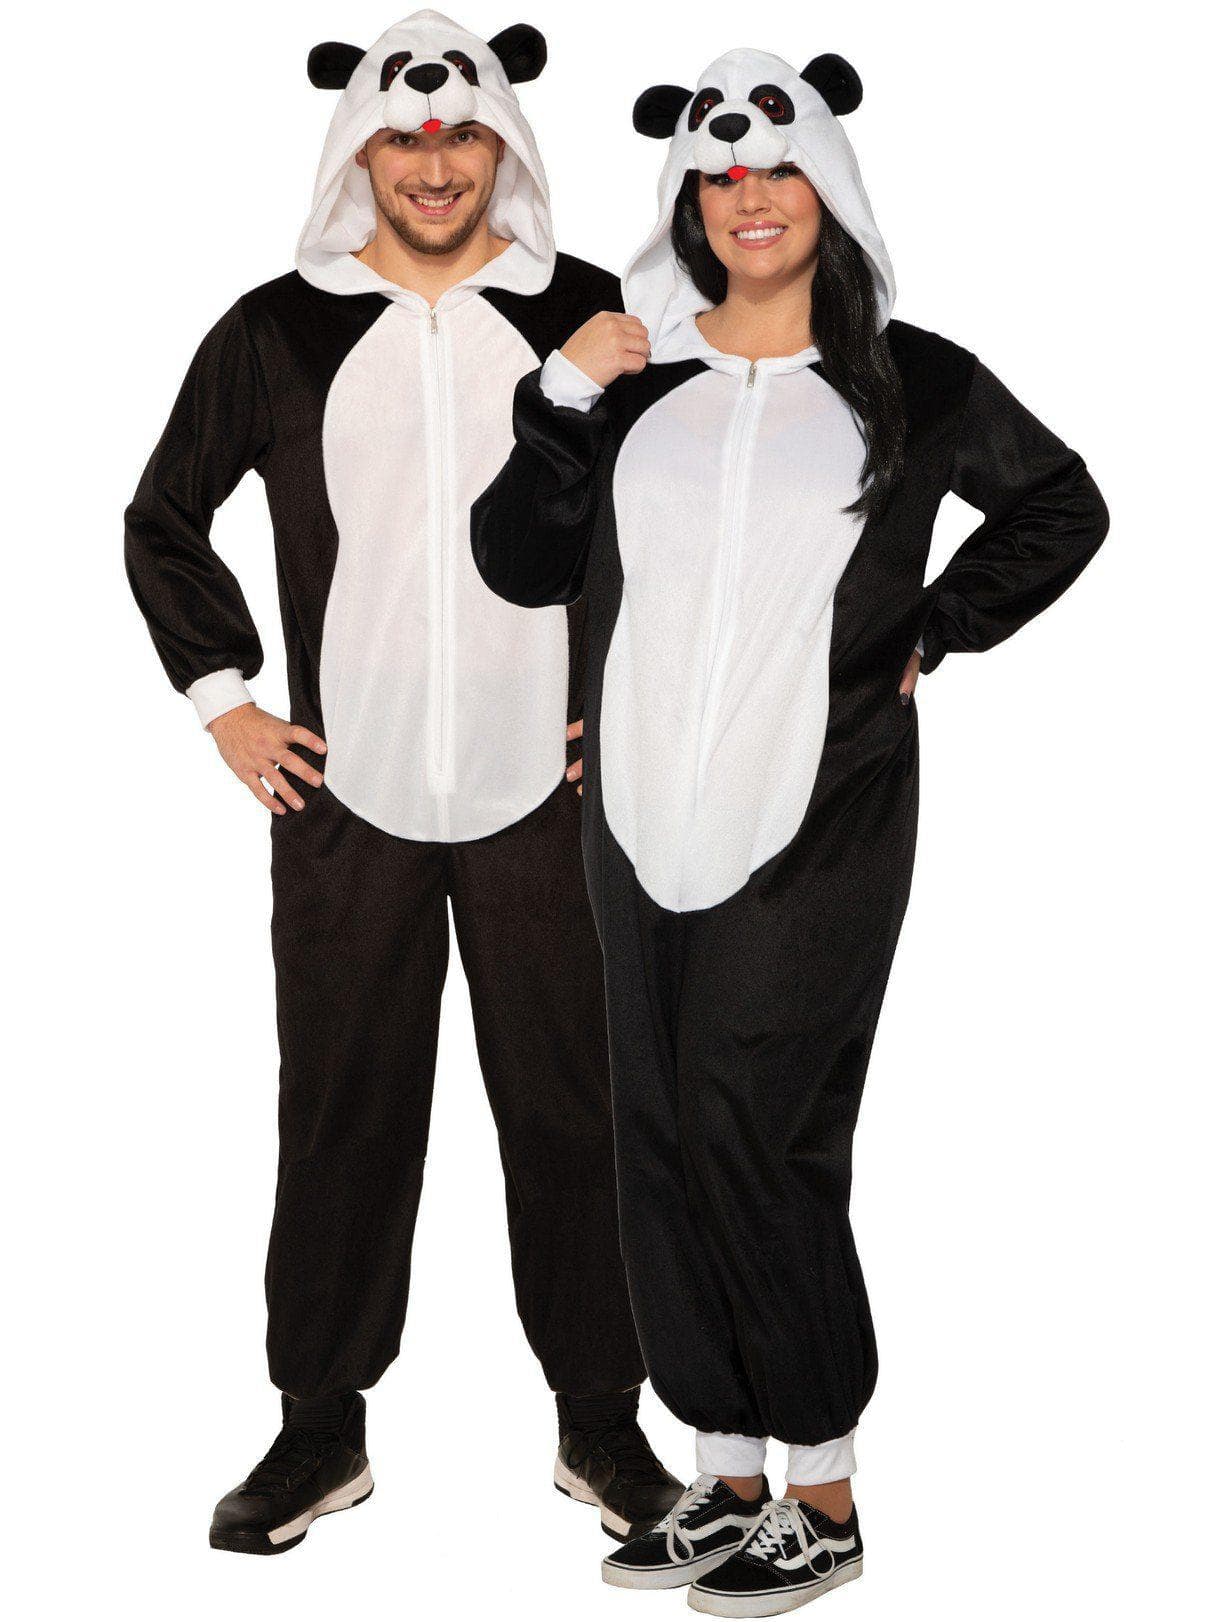 Adult Panda Costume - costumes.com